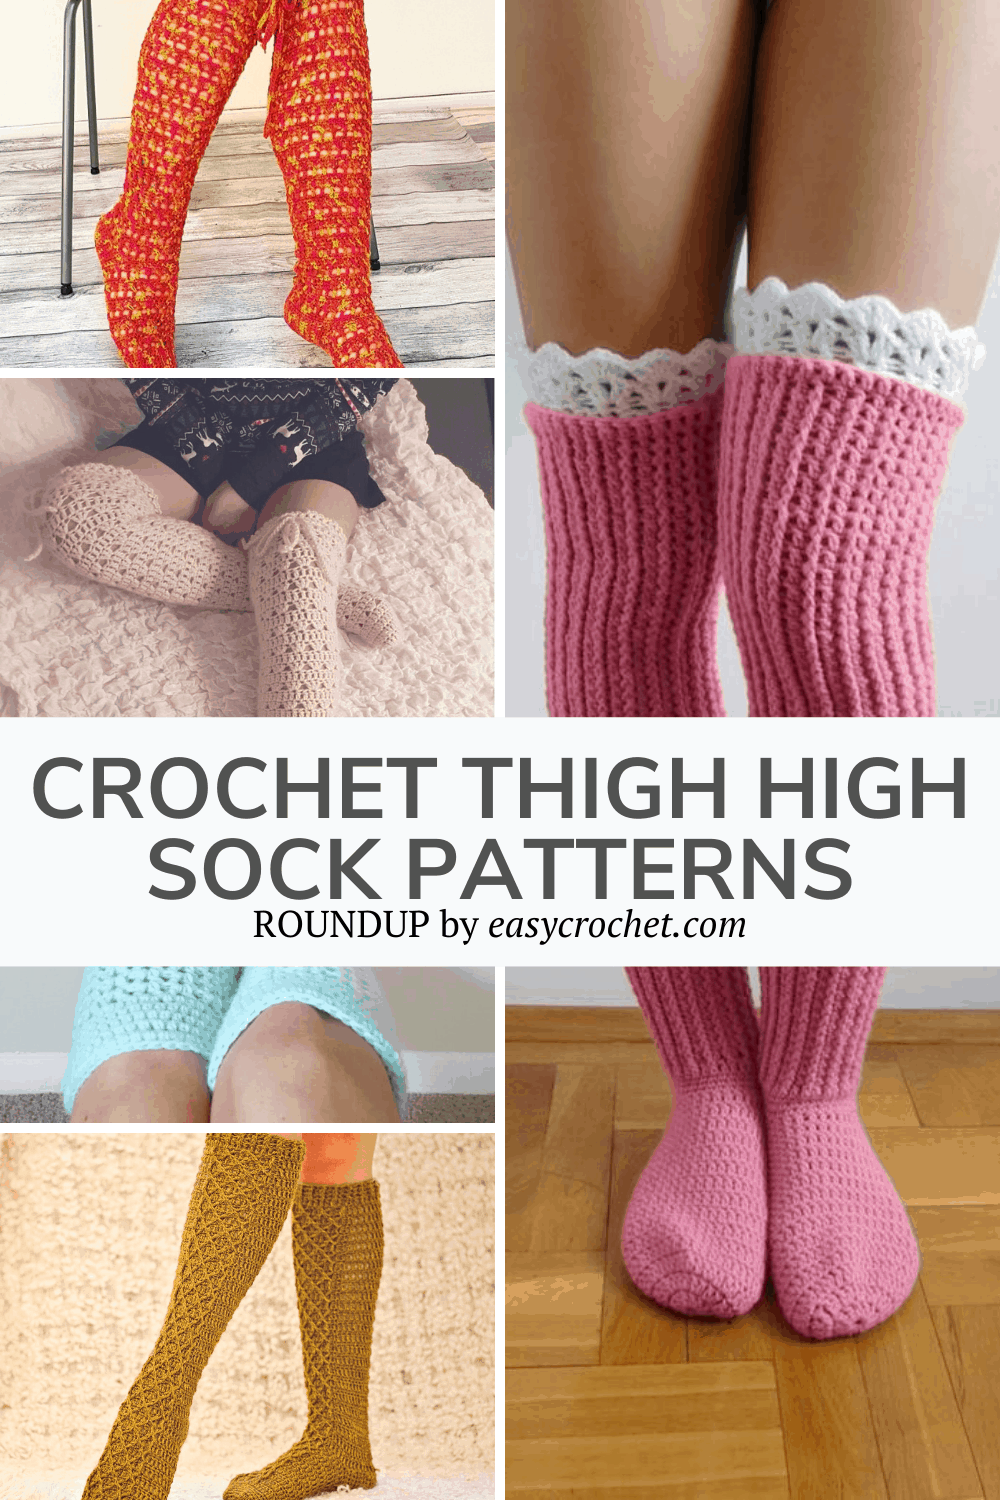 Crochet thigh high socks